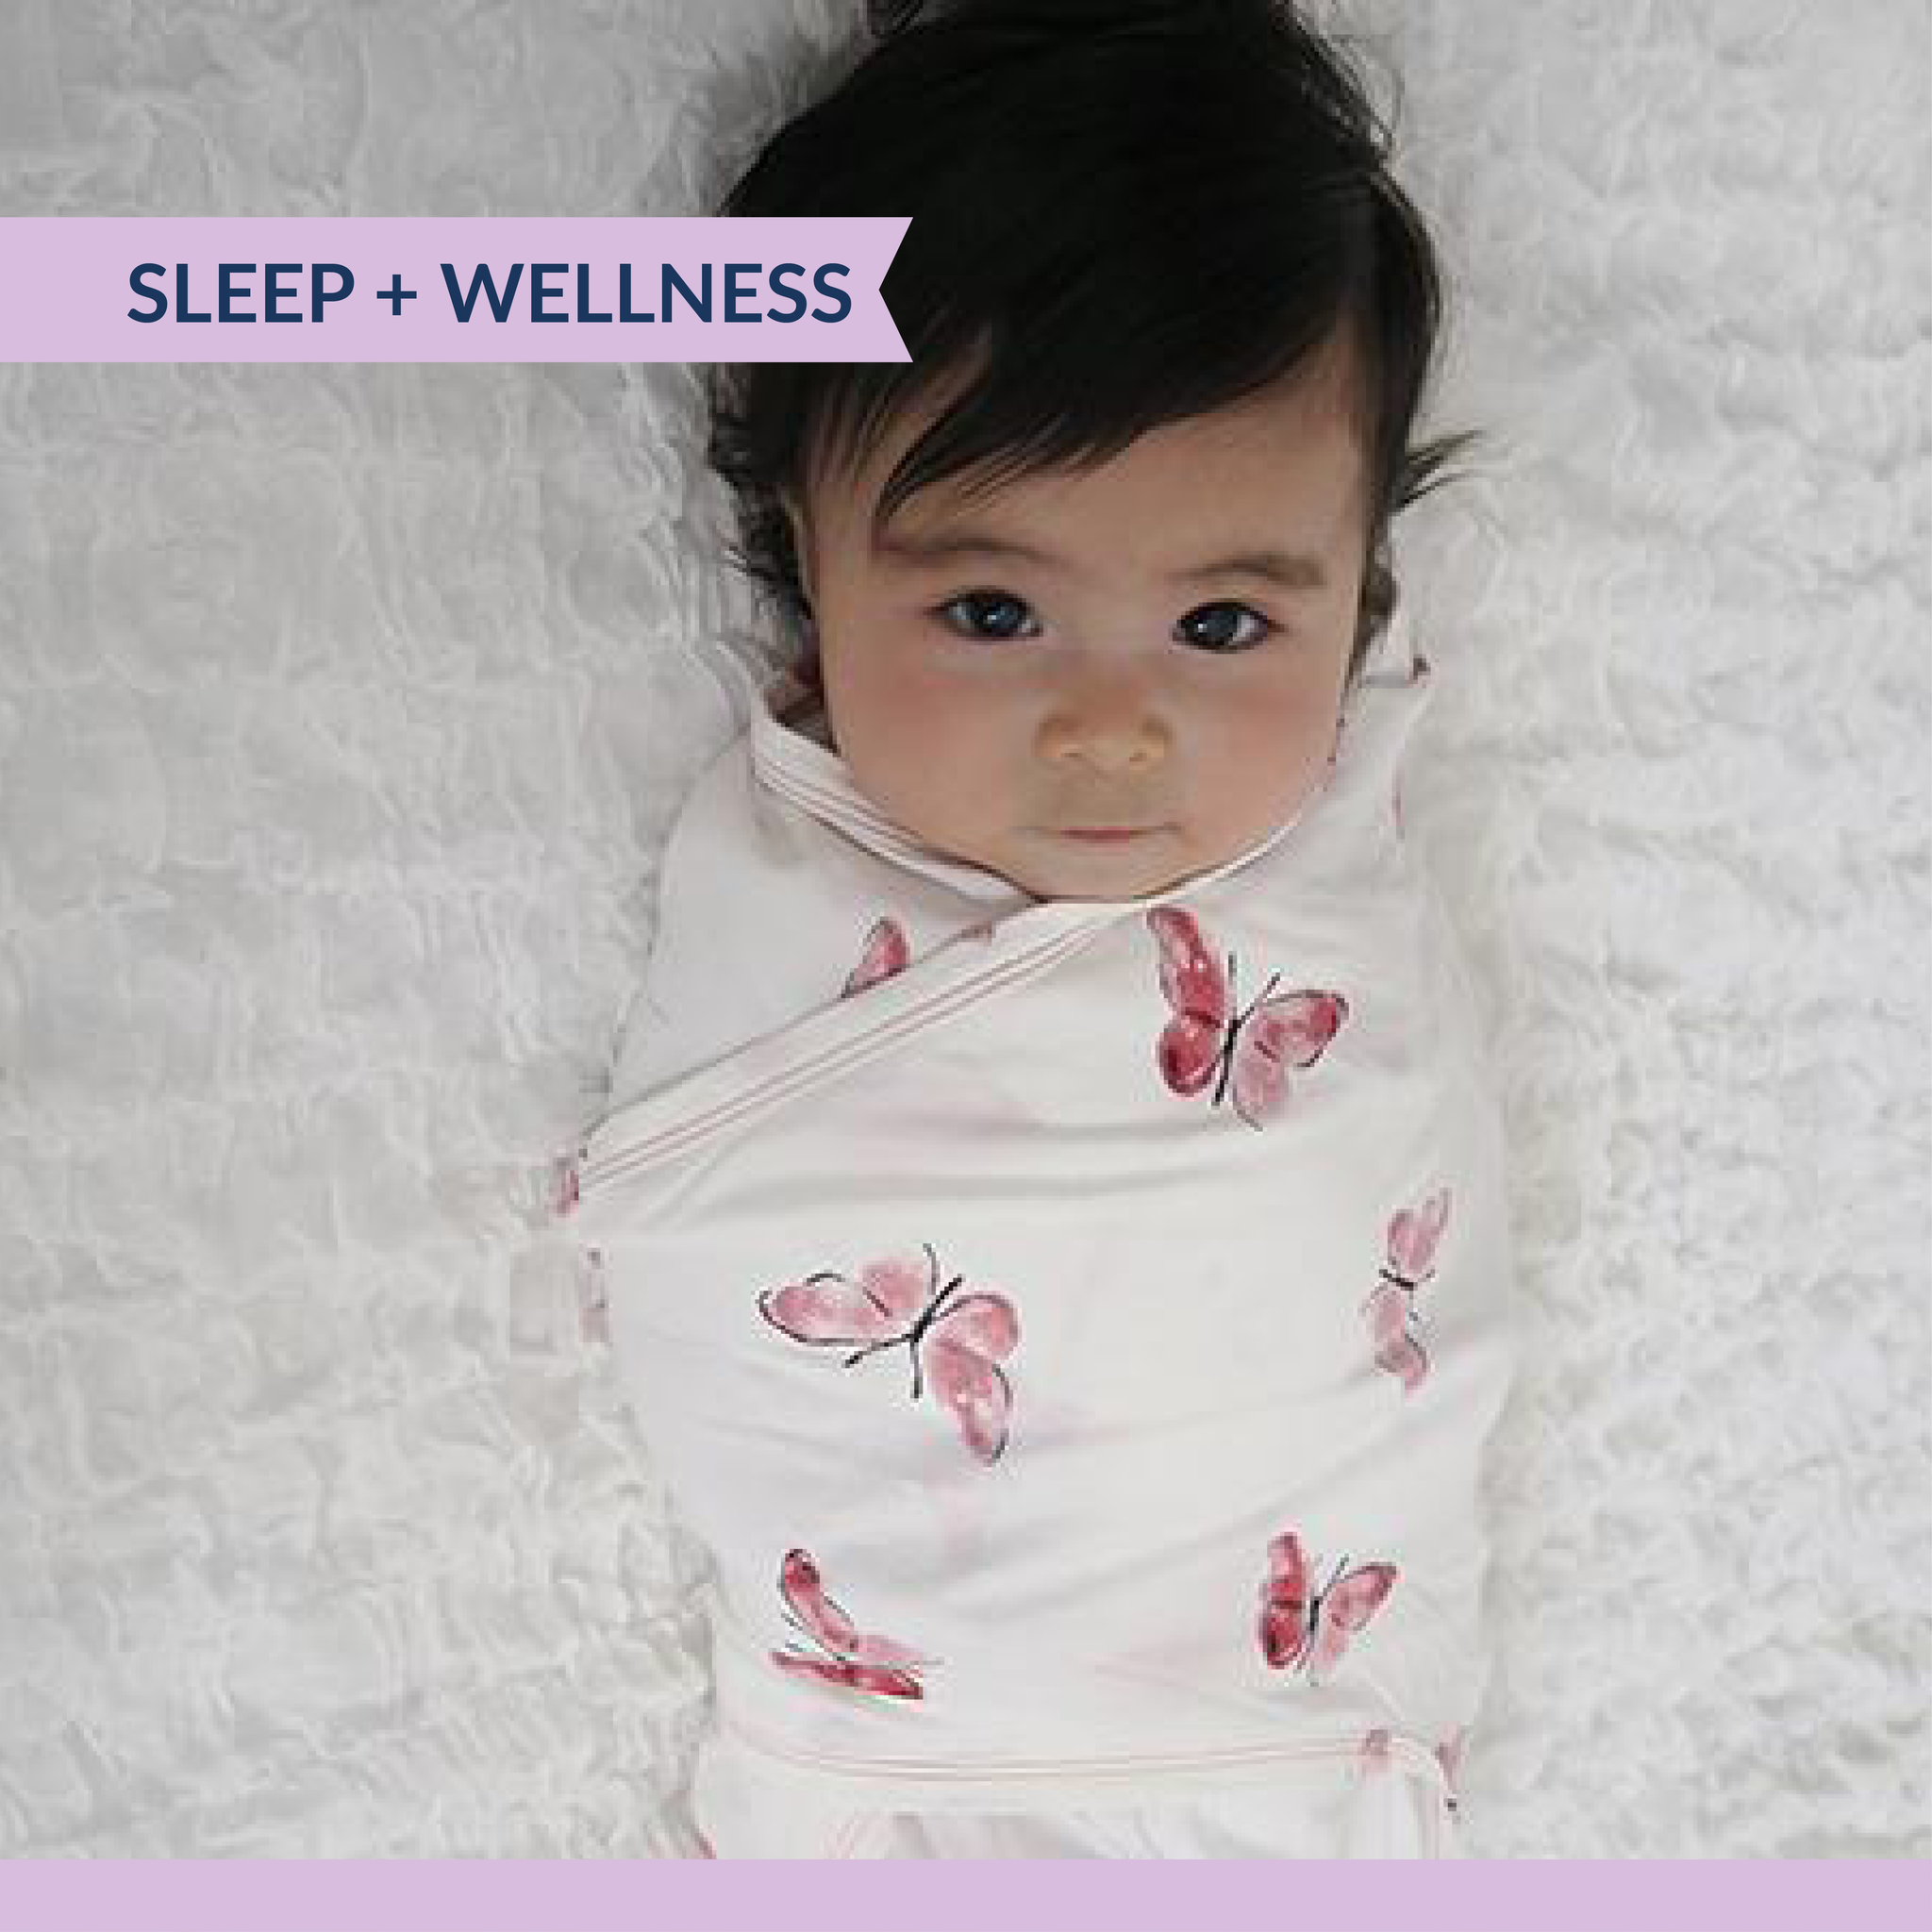 2 Month Old Baby Sleep: The Basics + Sample Sleep Schedule